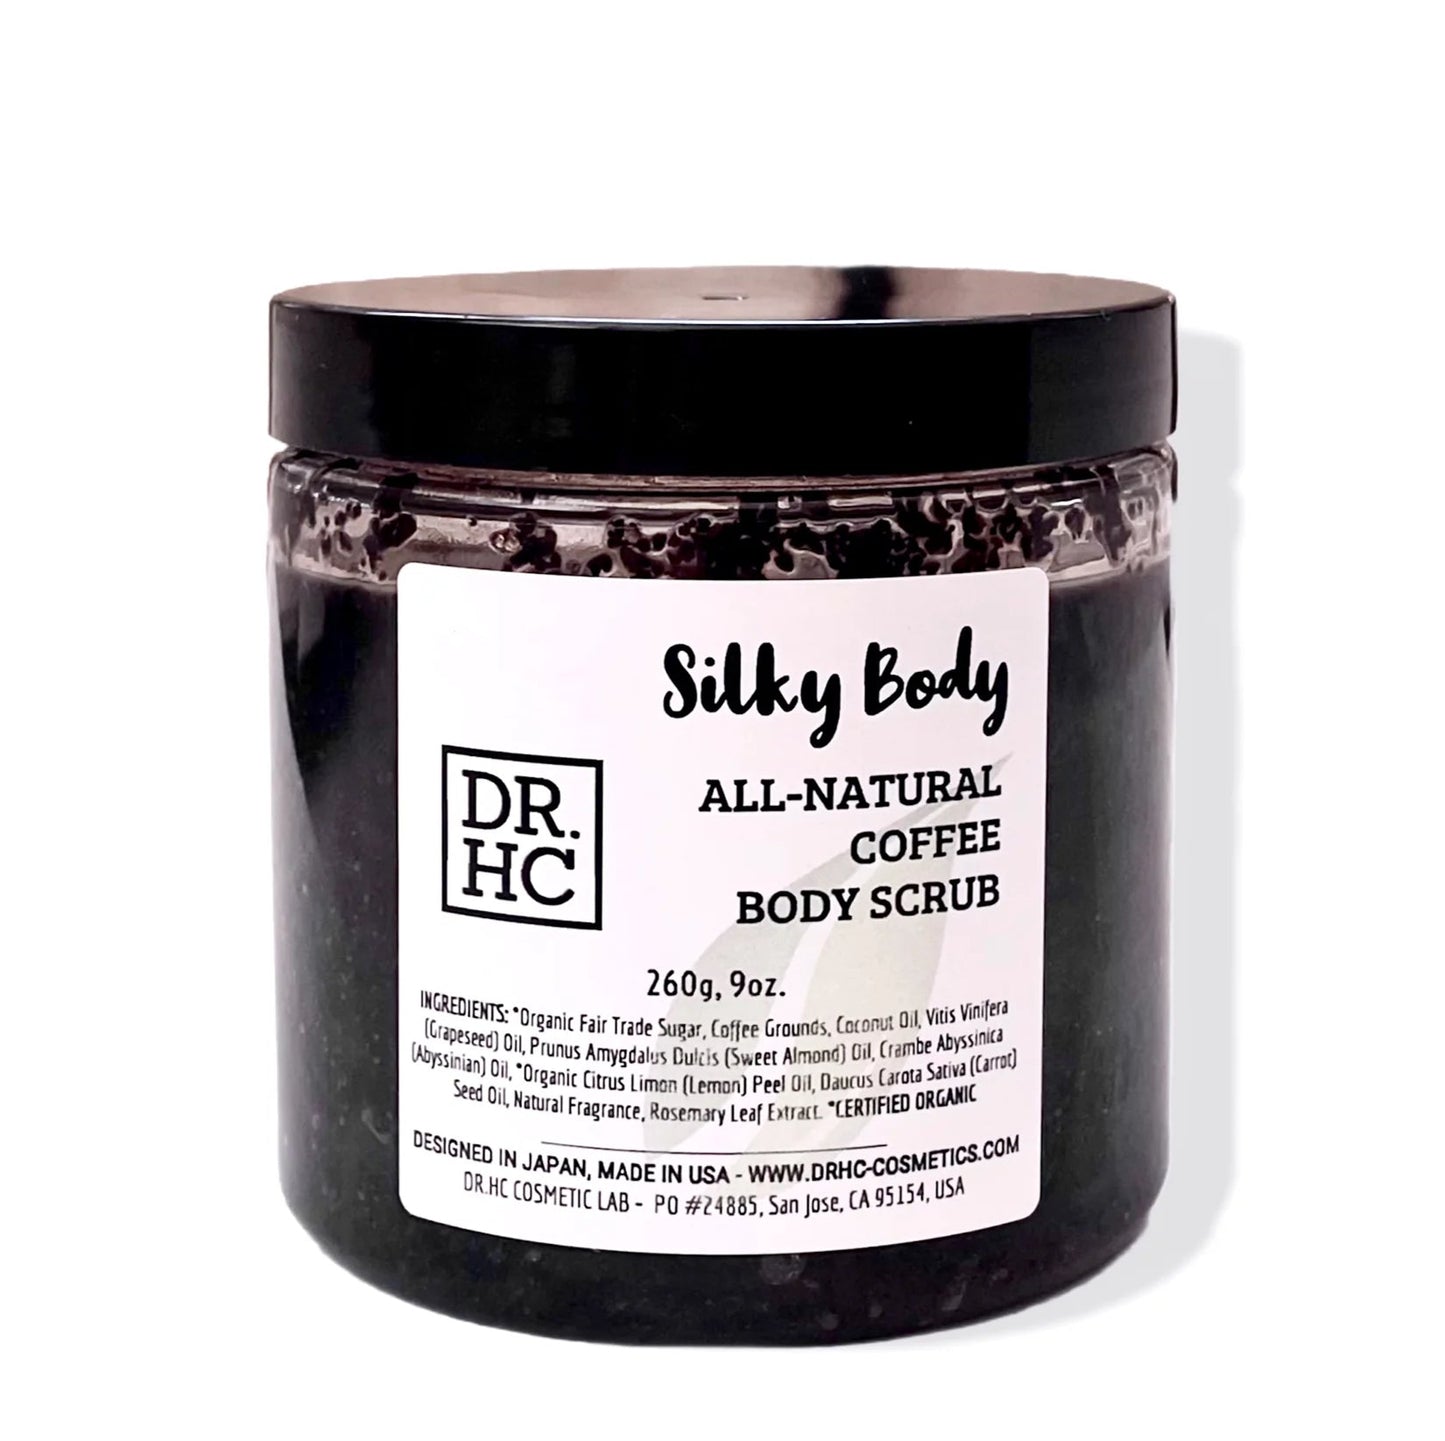 DR.HC Silky Body All-Natural Coffee Body Scrub (260g, 9oz.) (Skin brightening, Anti-aging, Anti-acne, Detoxifying, Softening...)-2